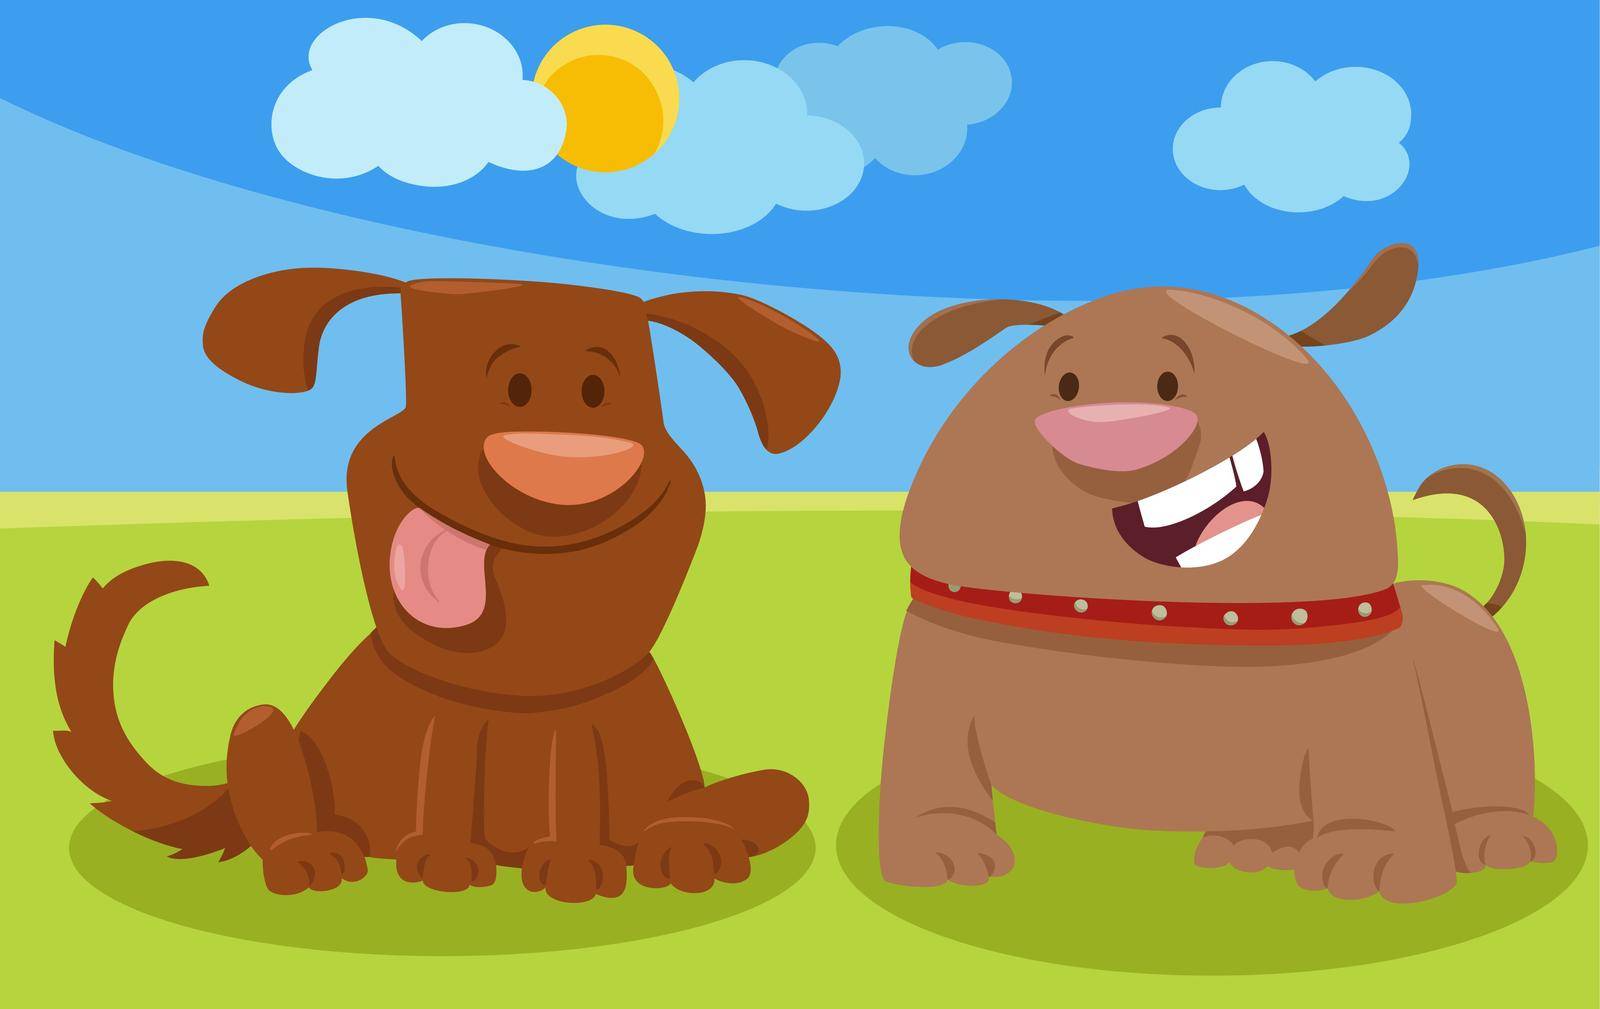 two funny cartoon dogs comic animal characters by izakowski